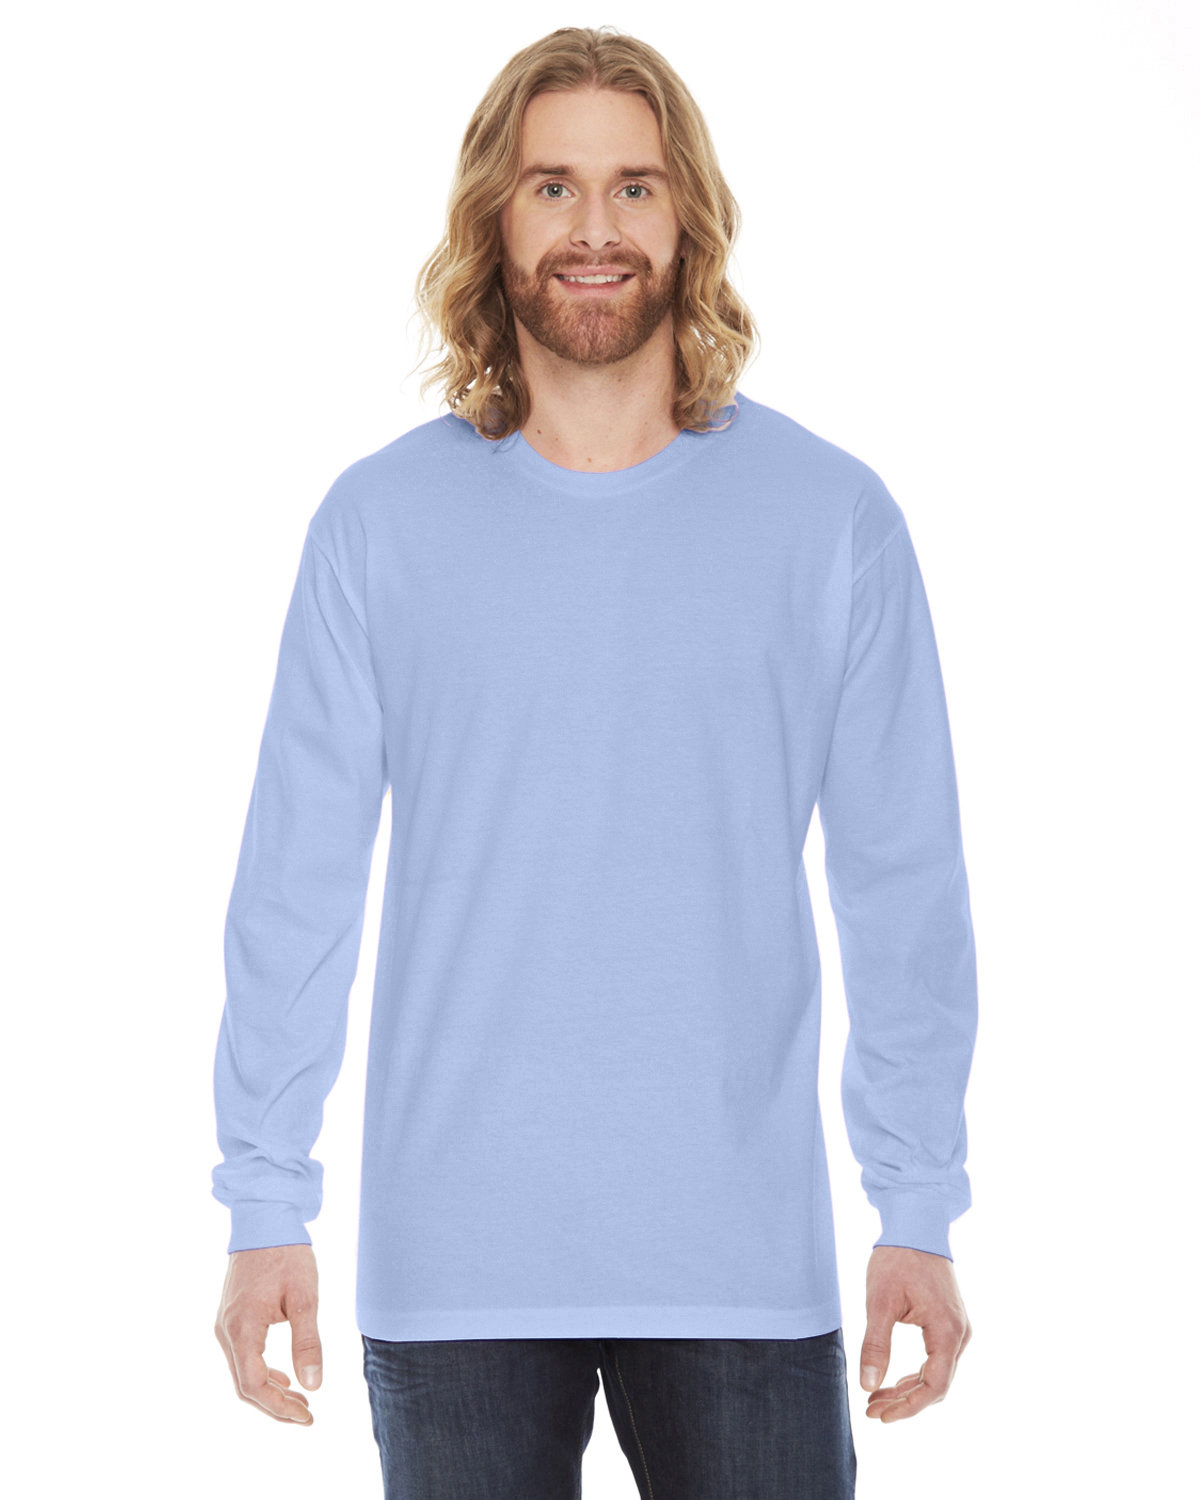 American Apparel Unisex Fine Jersey Long-Sleeve T-Shirt BABY BLUE 